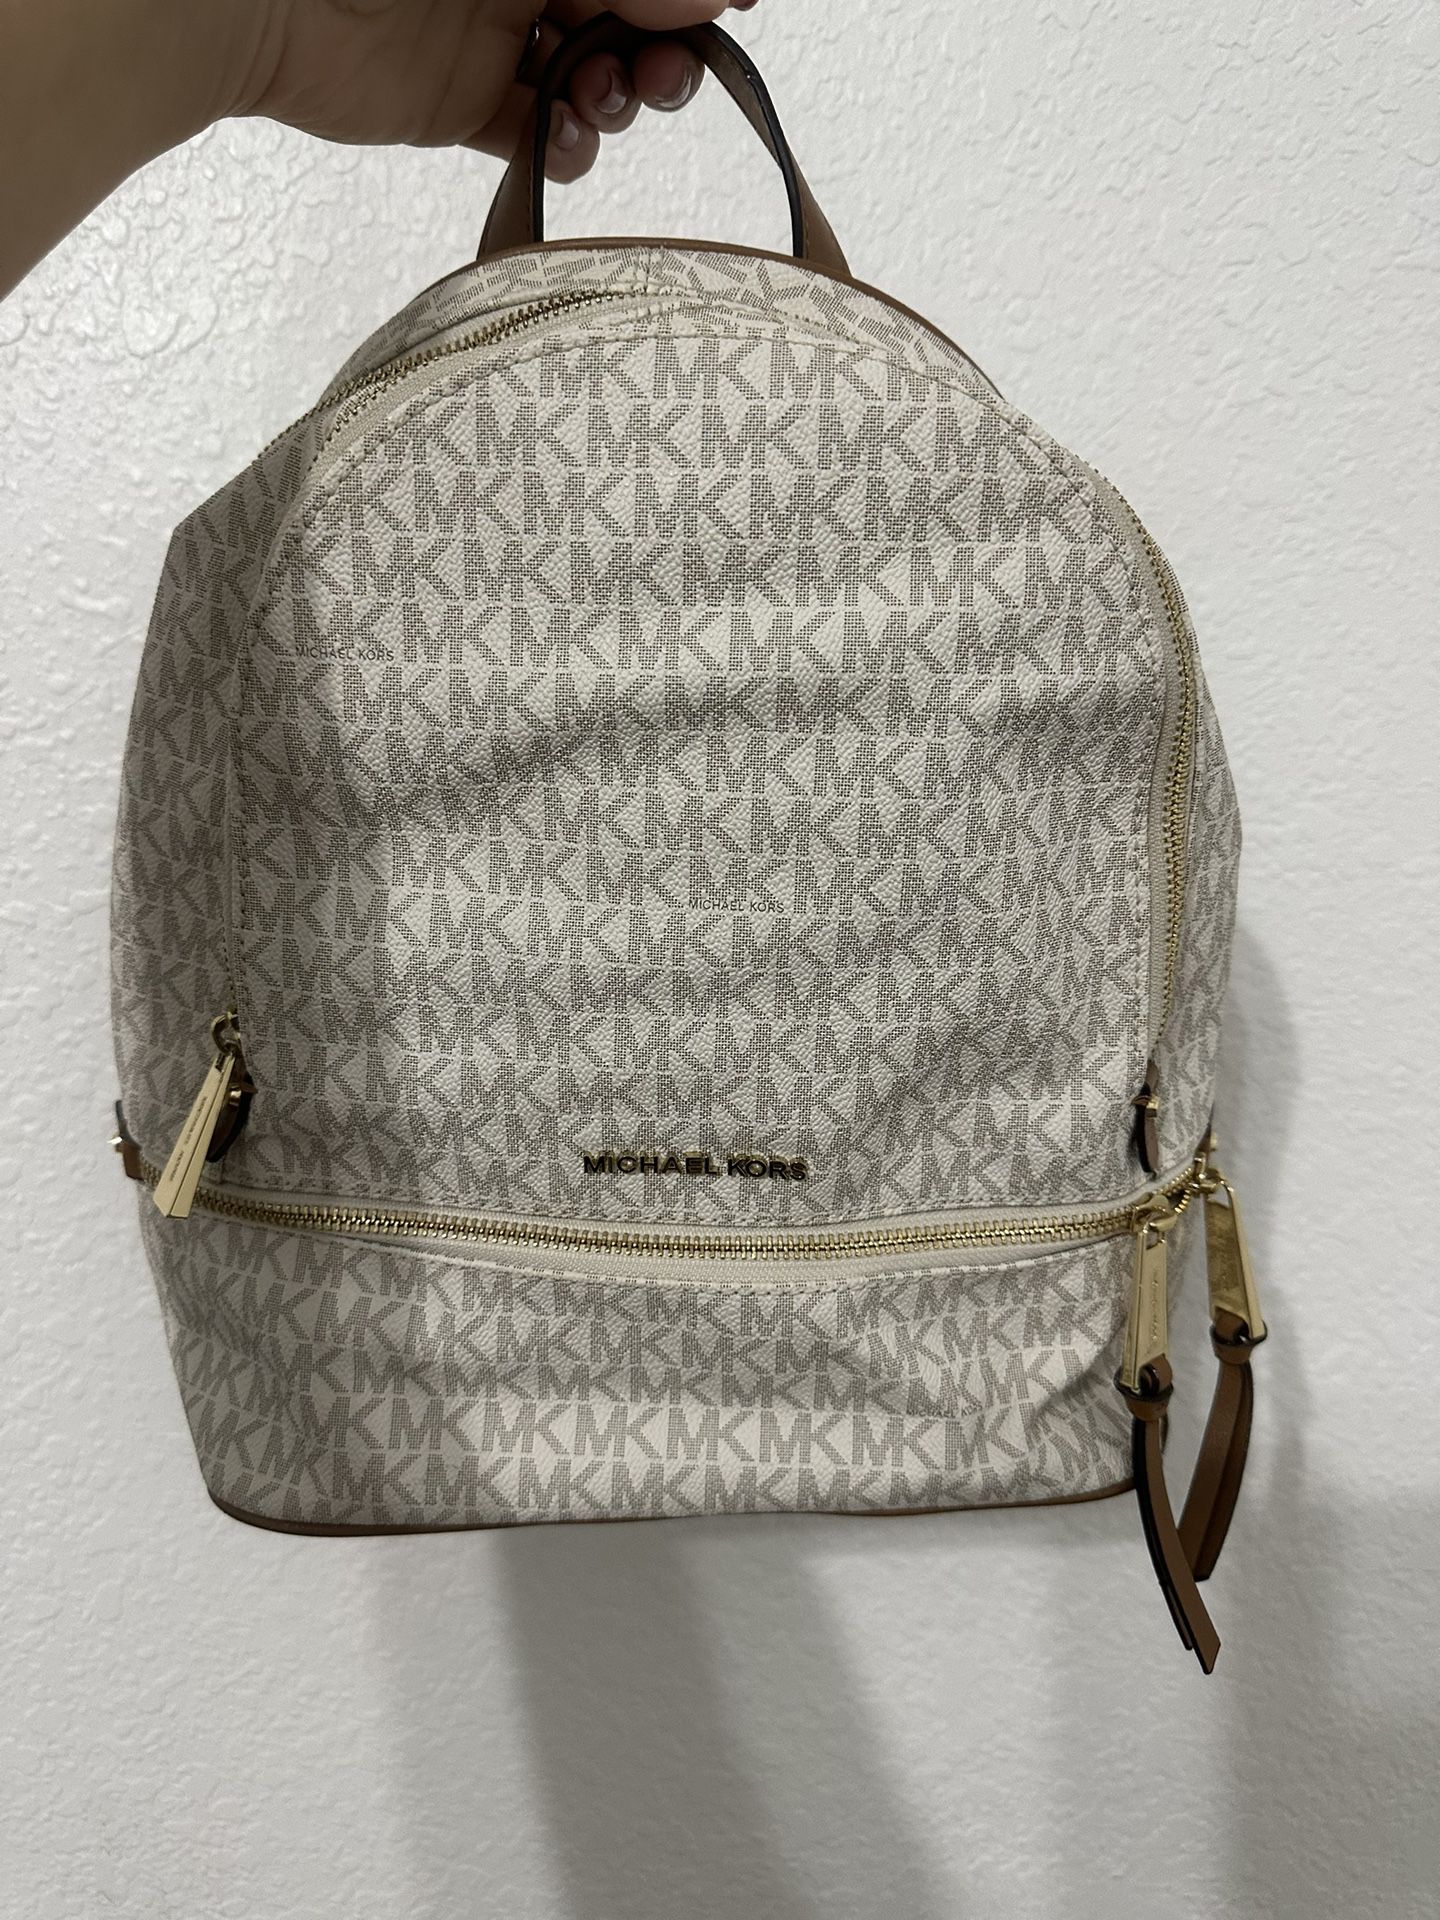 Michael Kors Backpack for Sale in Homestead, FL - OfferUp